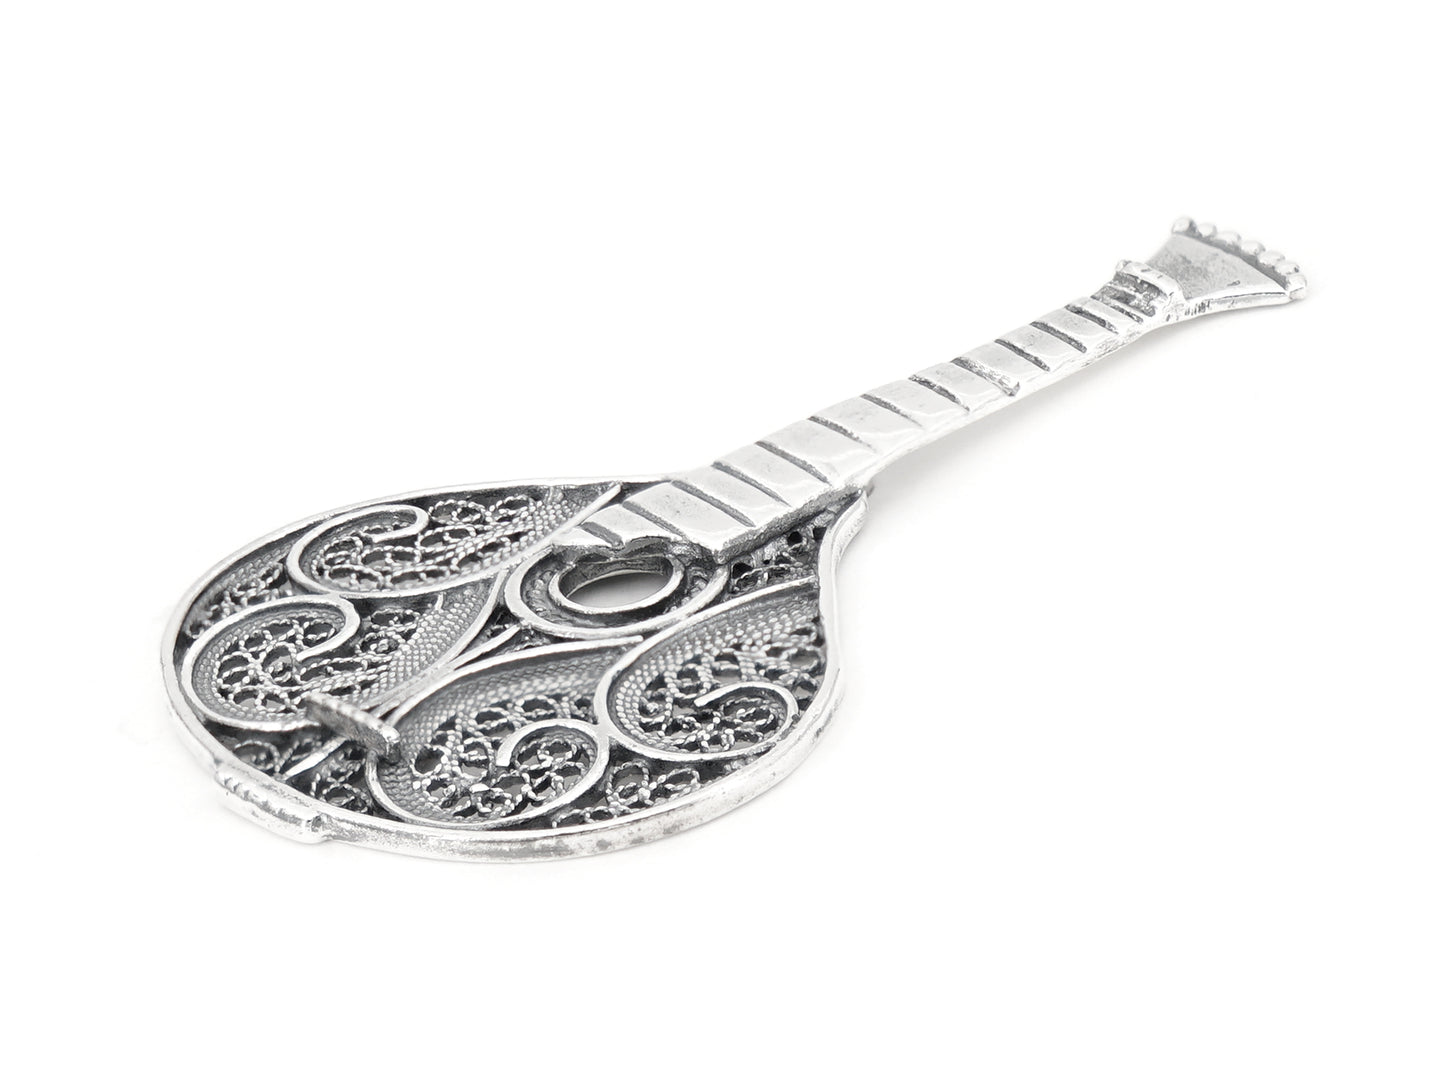 Pin Fado Guitarra Portuguesa, Filigrana Portuguesa, Prata de Lei 925 - Pormenor